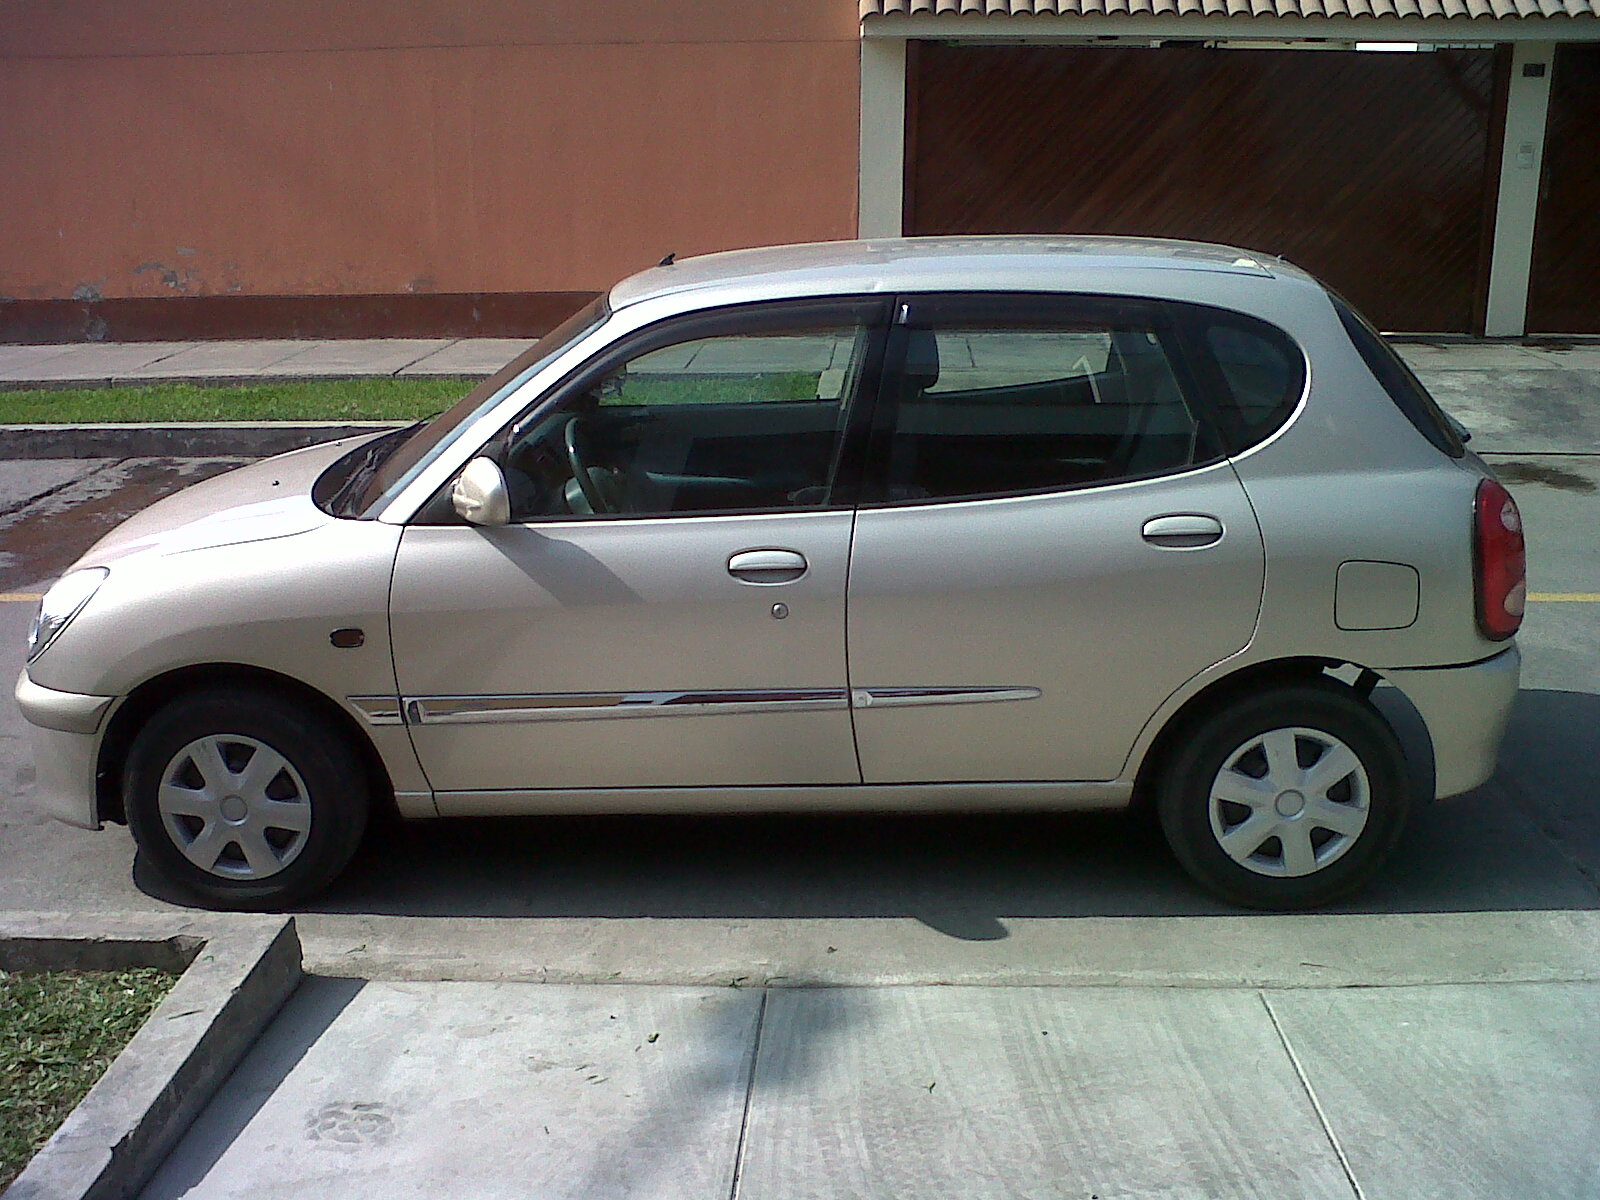 Toyota duet 2002 photo - 2